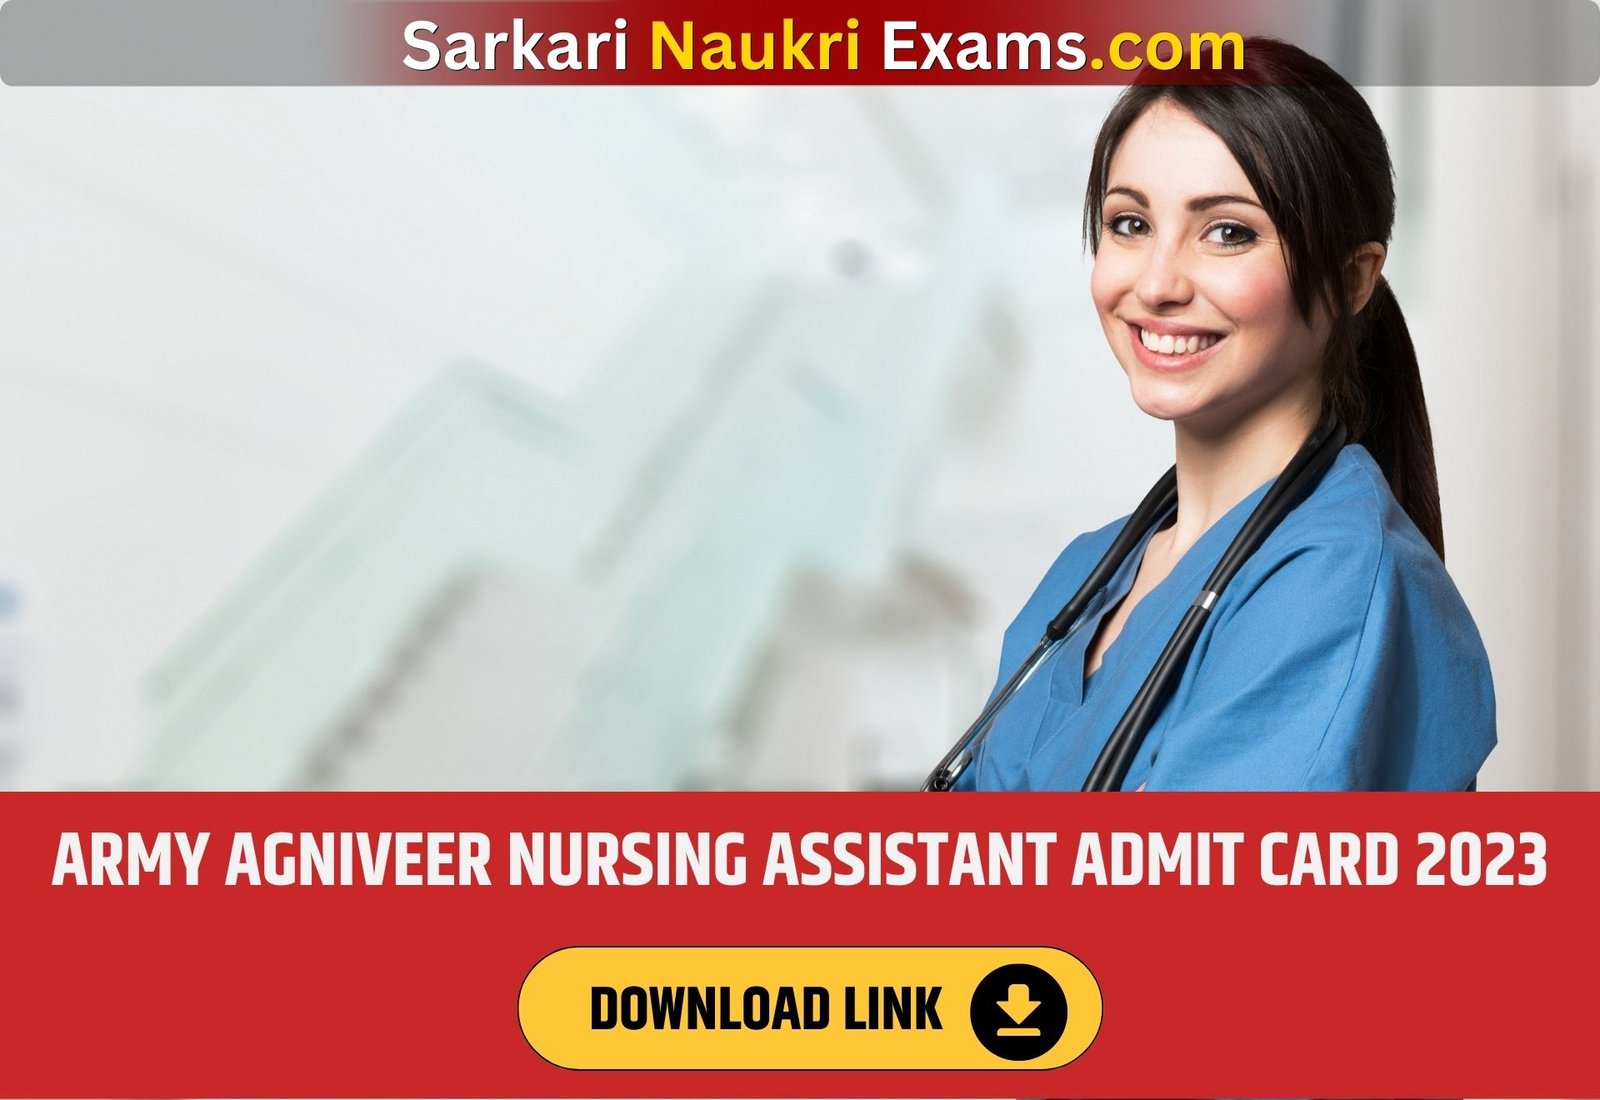 Army Agniveer Nursing Assistant Admit Card 2023 | Download Link, [Exam Date]